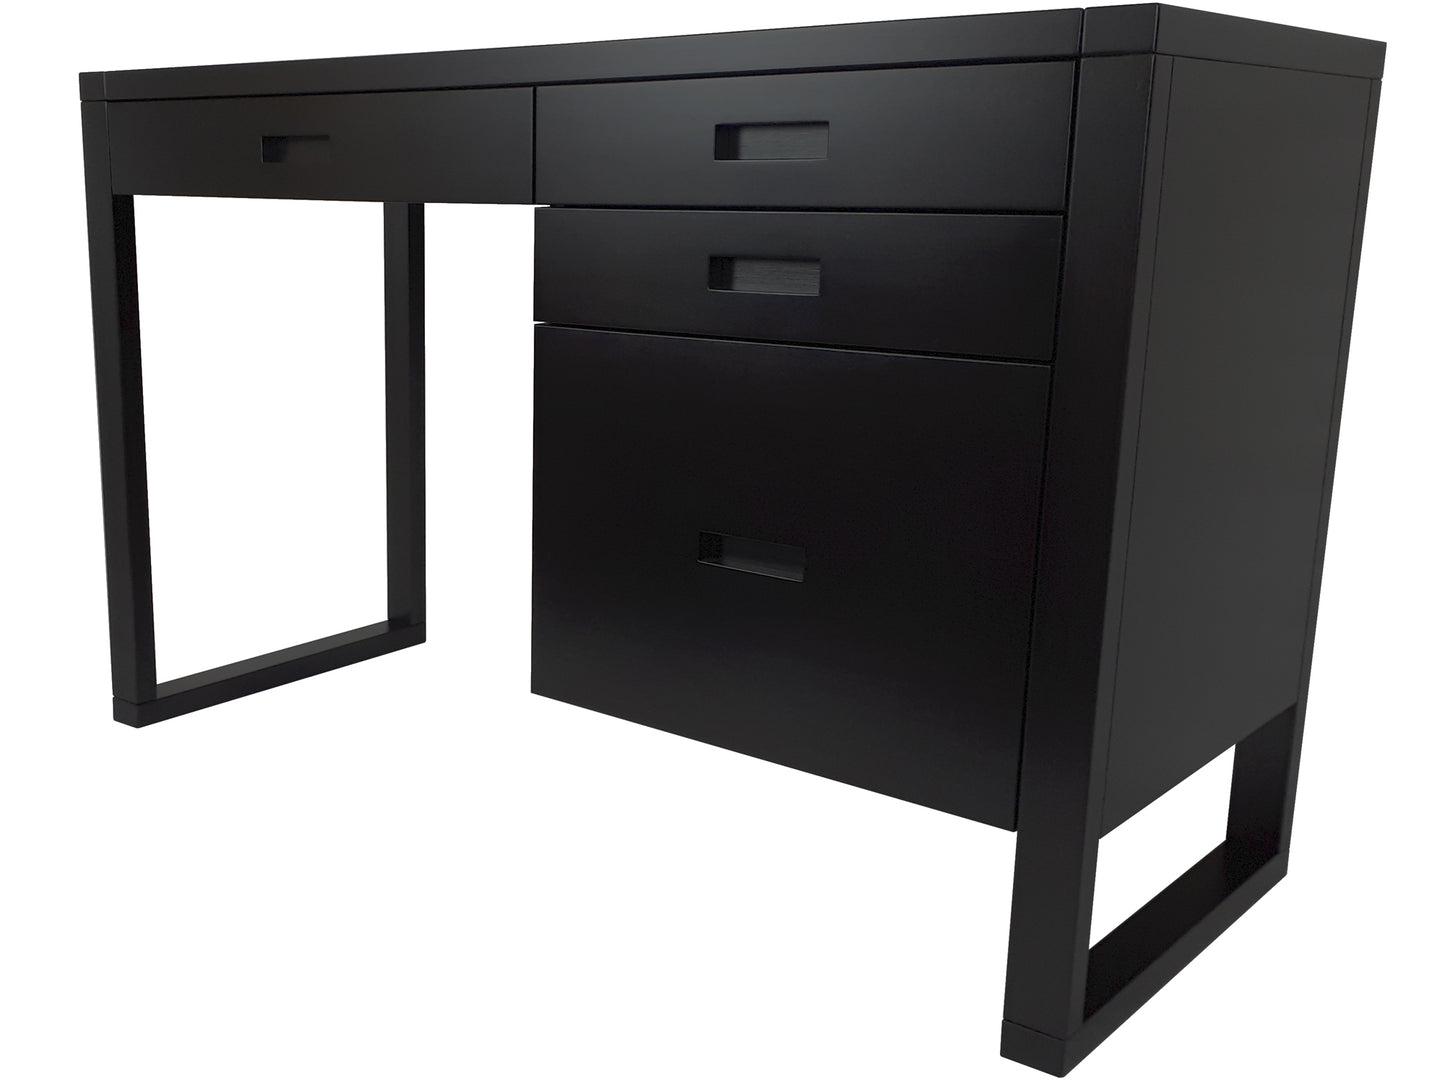 Tangent Desk - bottom drawer is for printer or filing cabinet